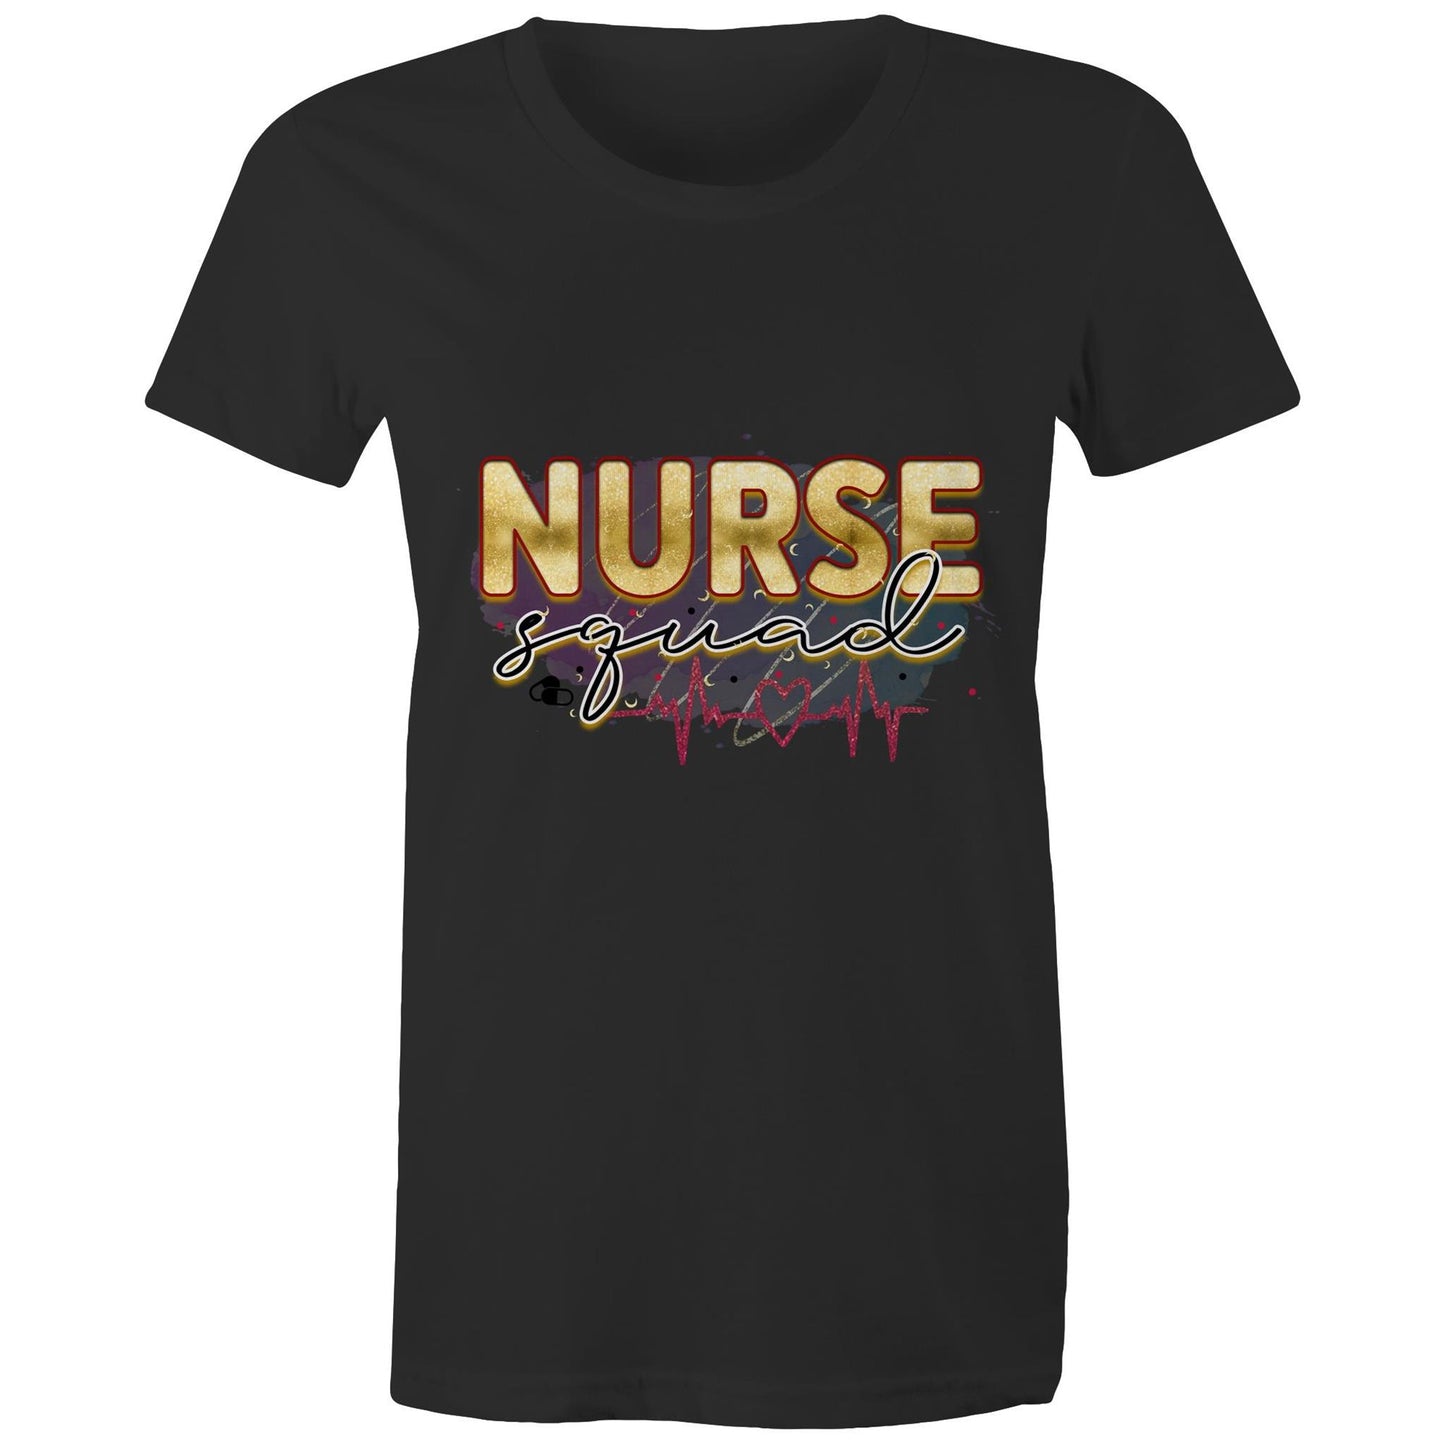 Nurse Squad Women's Maple Tee